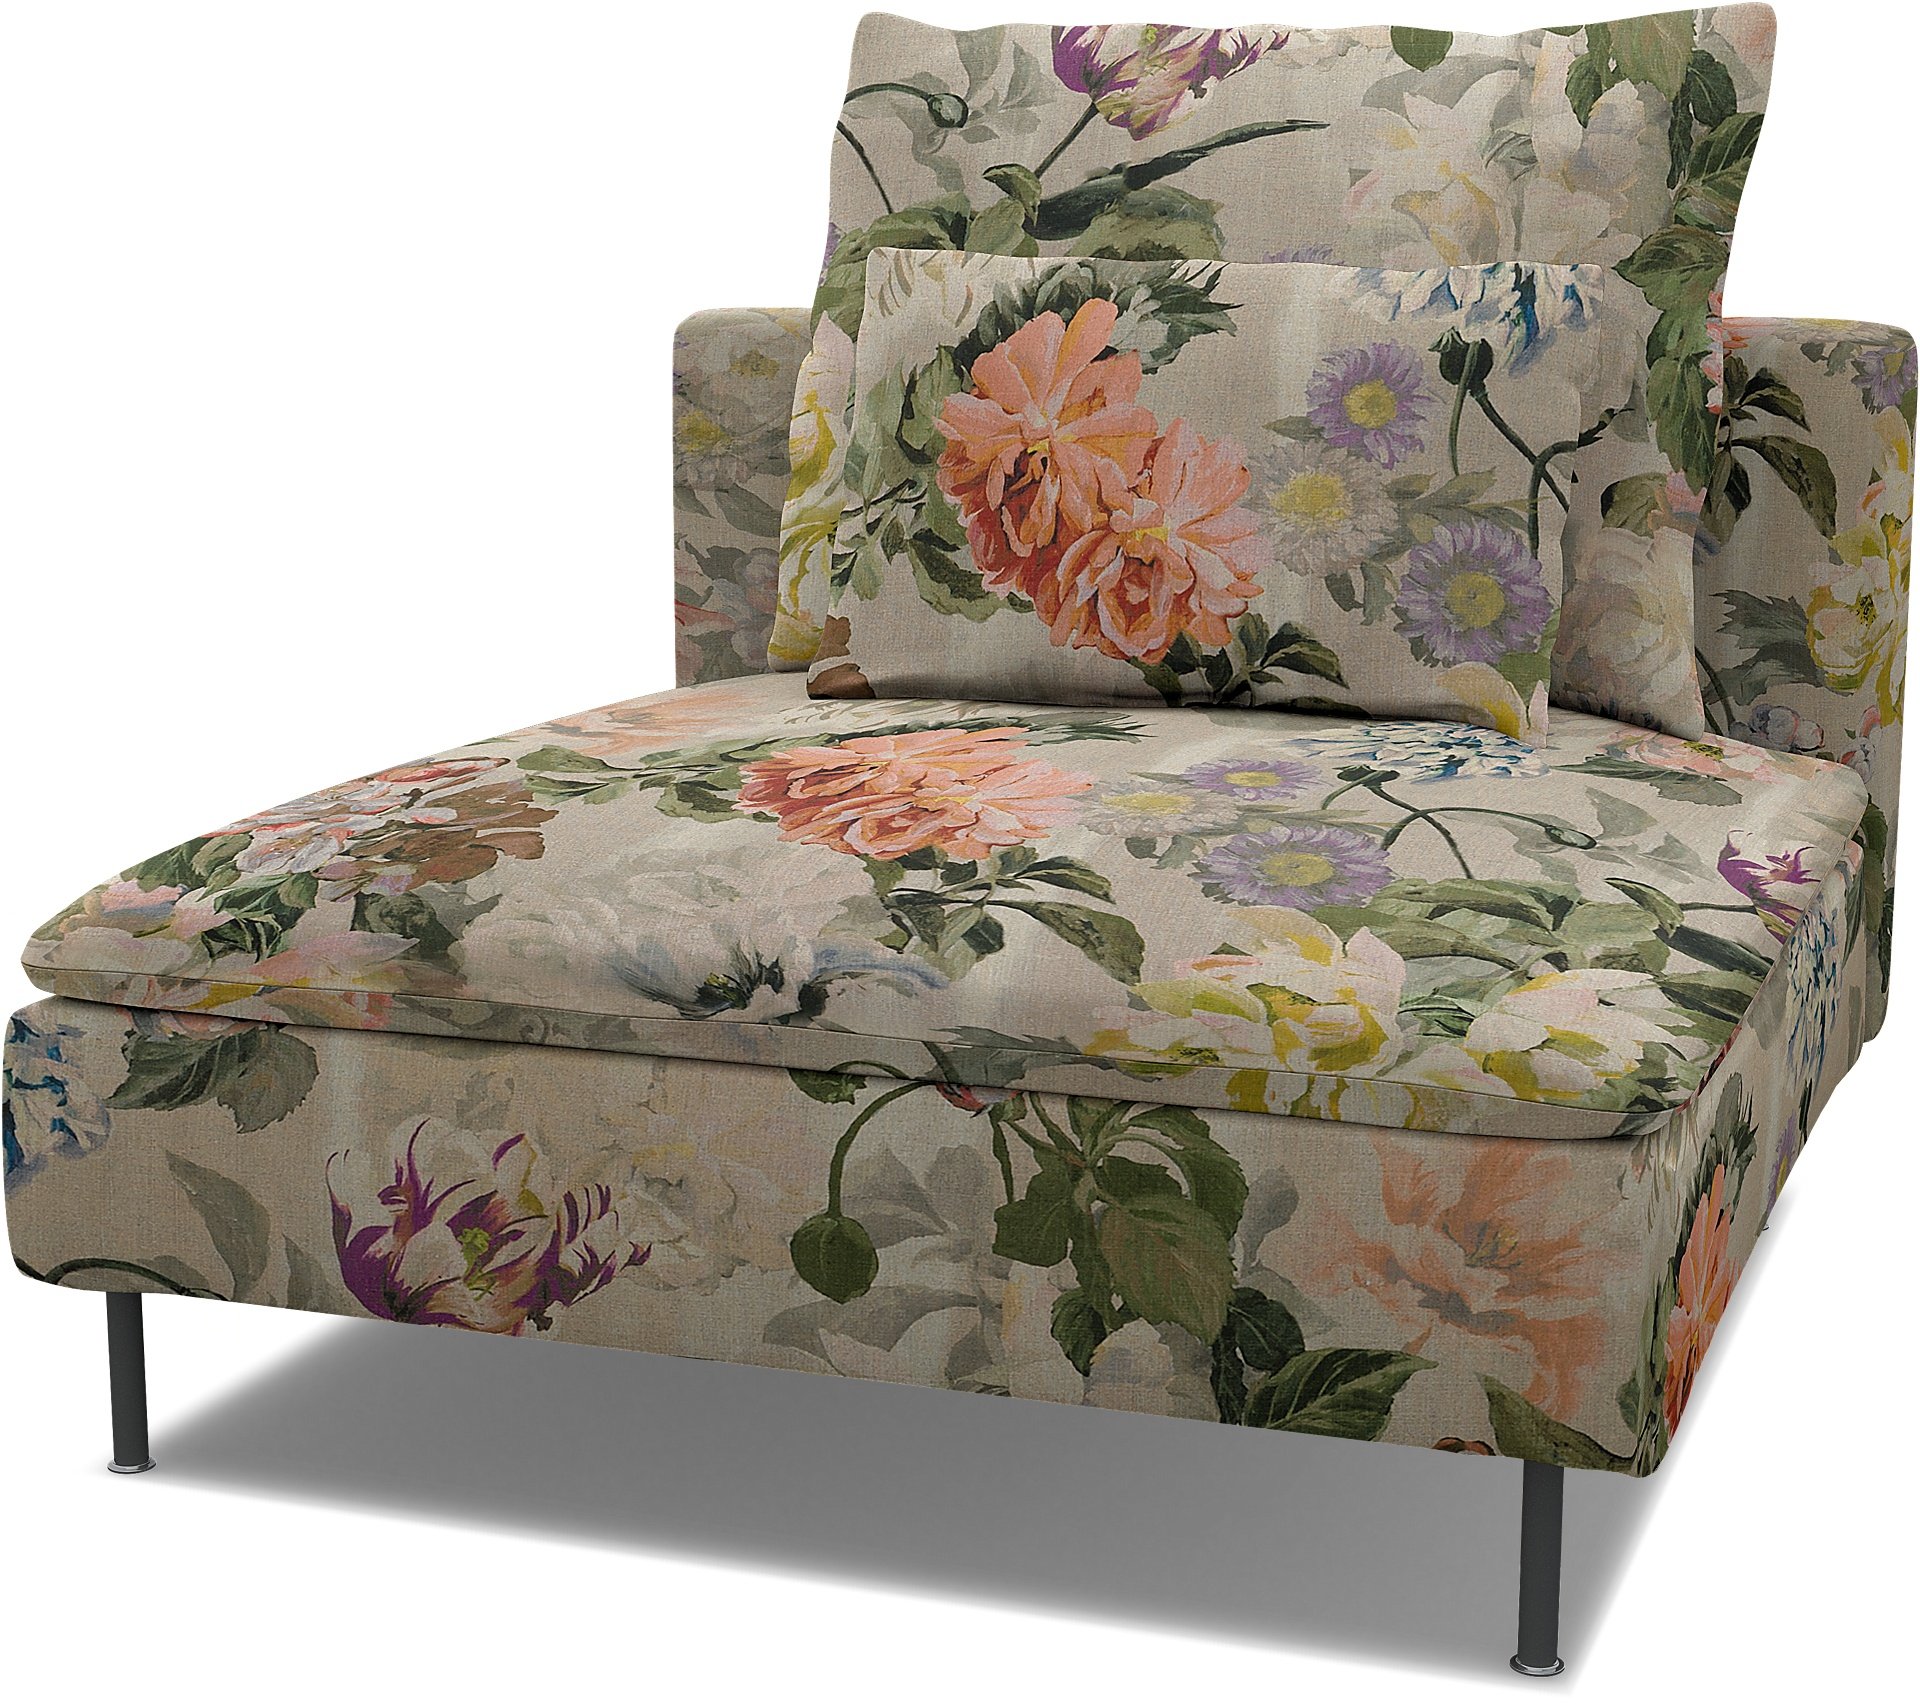 Spare seat cushion cover for SODERHAMN 1 SEAT SECTION , Delft Flower - Tuberose, Linen - Bemz